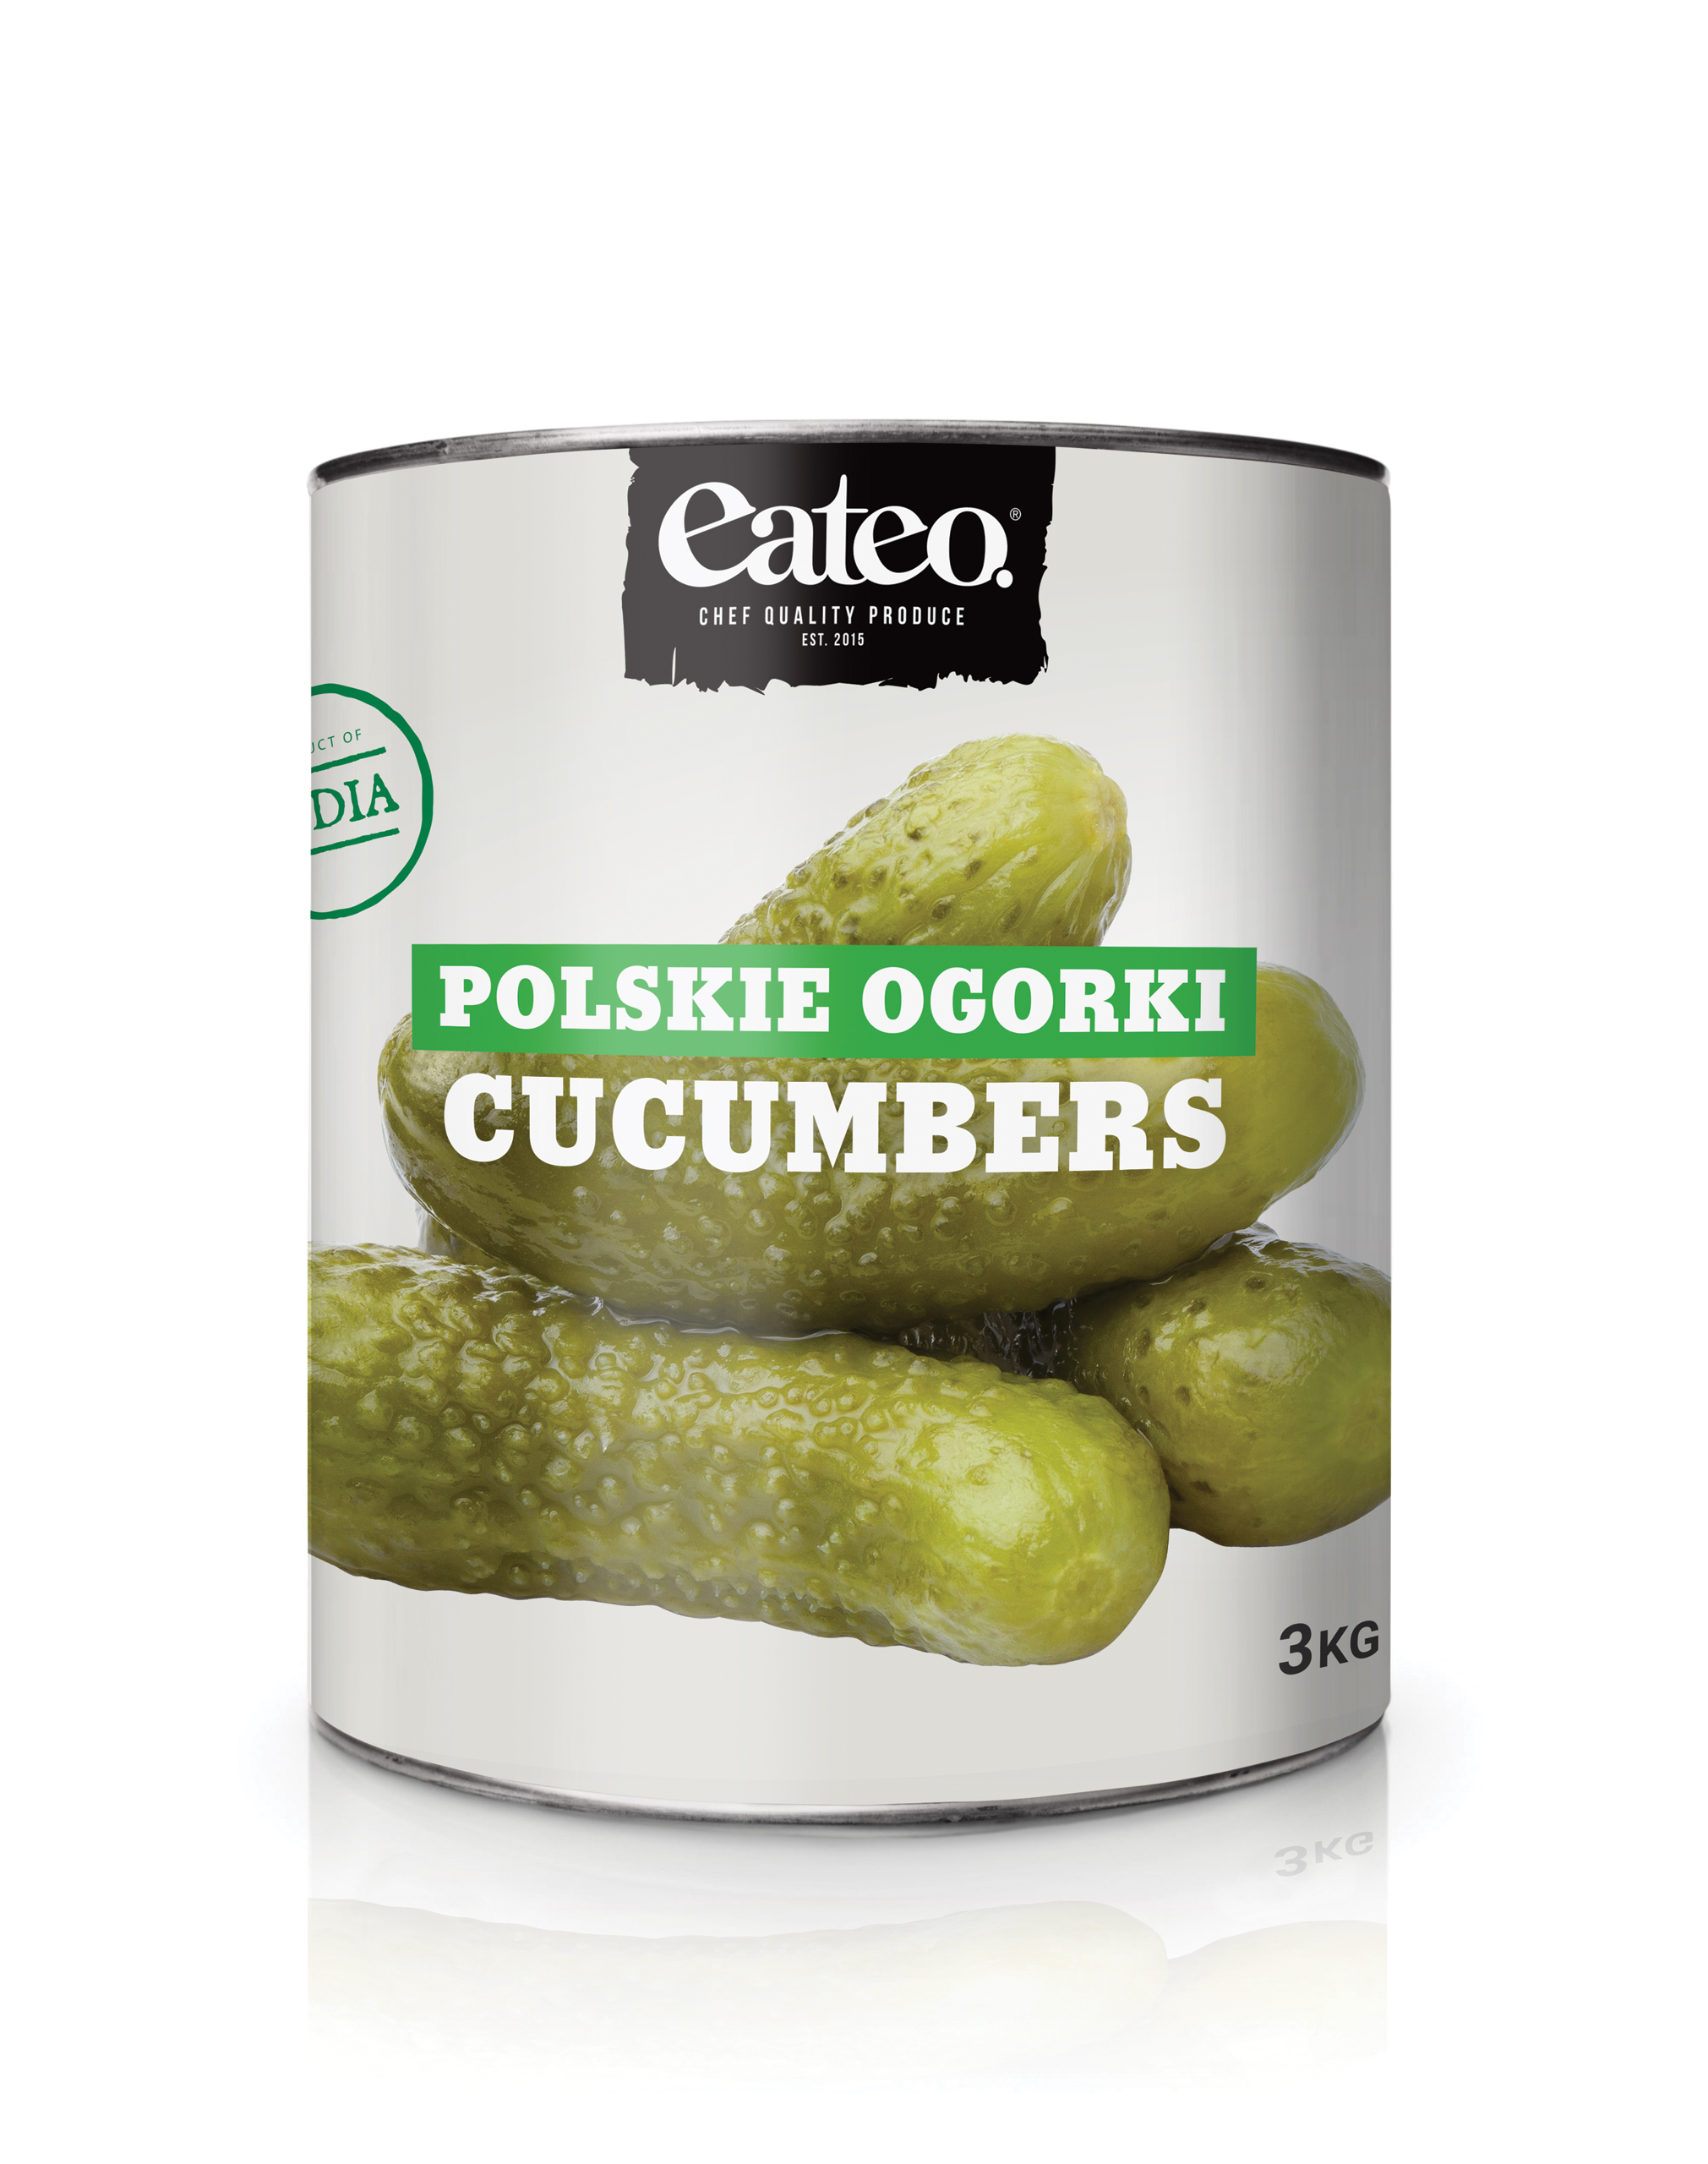 Polskie Orgorki Cucumbers